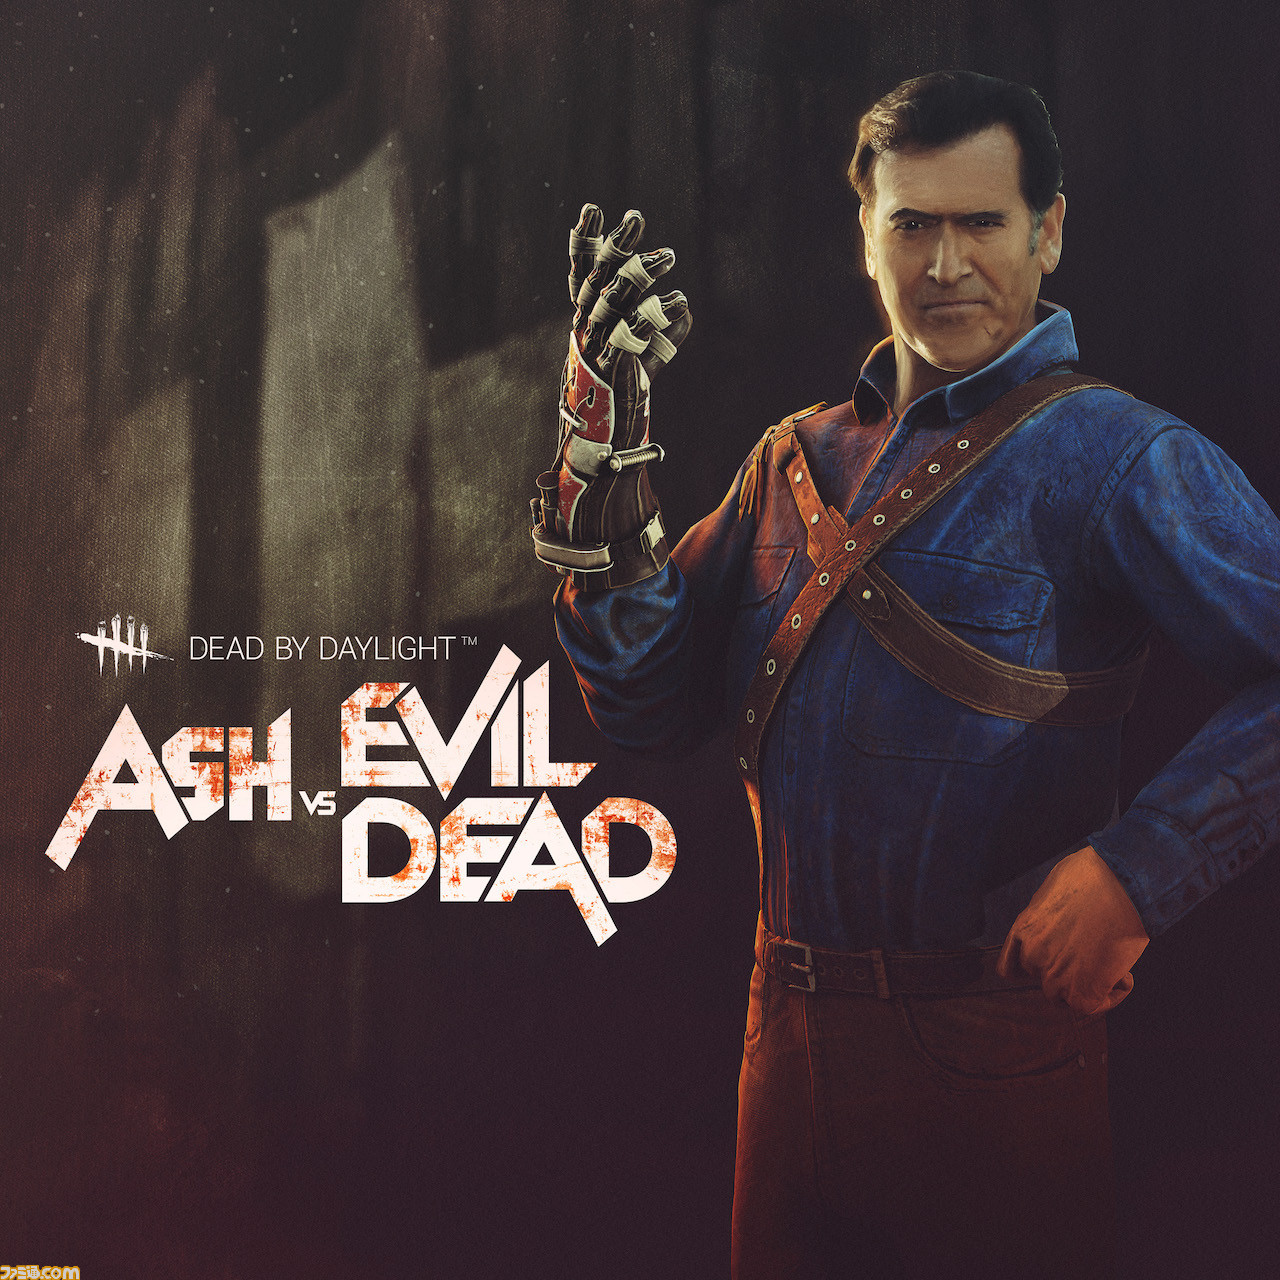 Dead By Daylight 最新チャプター Ash Vs Evil Dead 邦題 死霊のはらわた リターンズ が本日 4月3日 より配信開始 ファミ通 Com